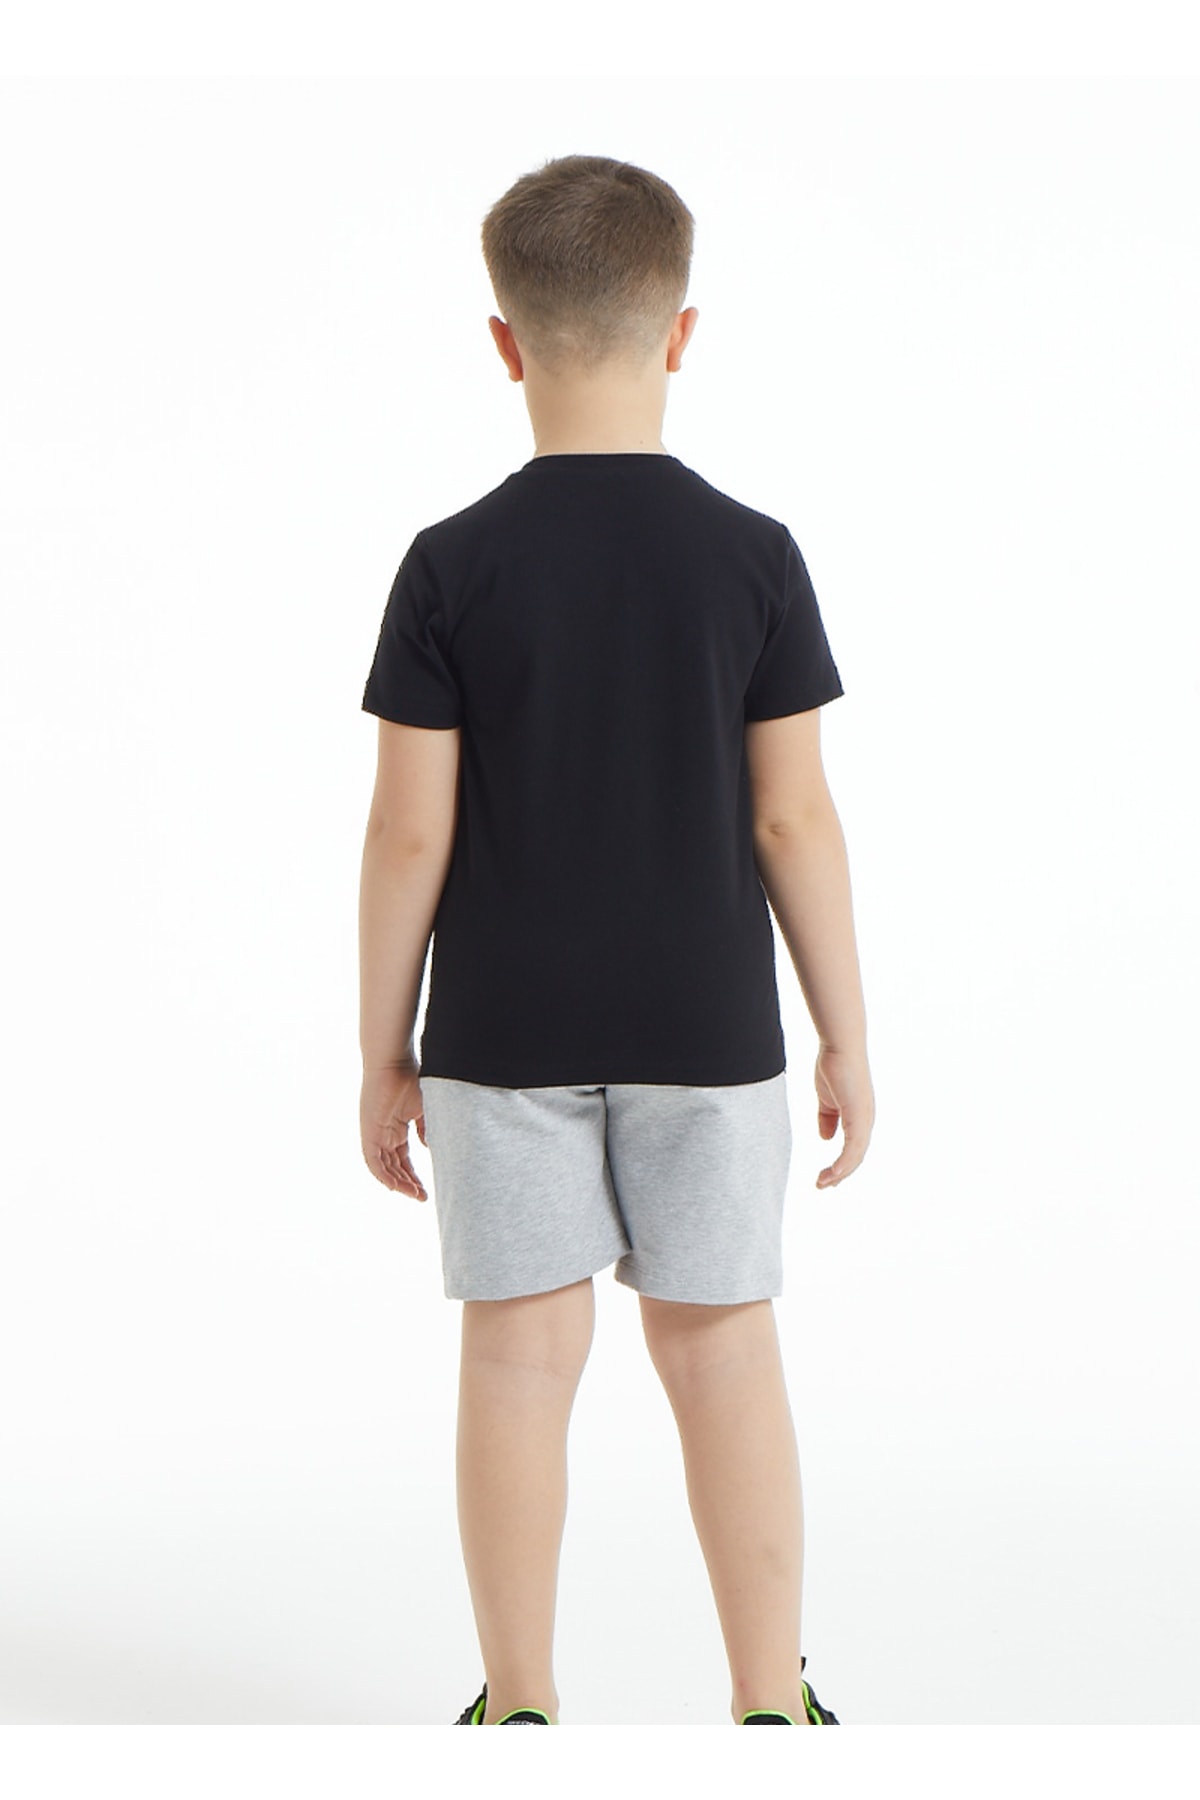 Blackspade Erkek Çocuk Tişört - Siyah NX6528